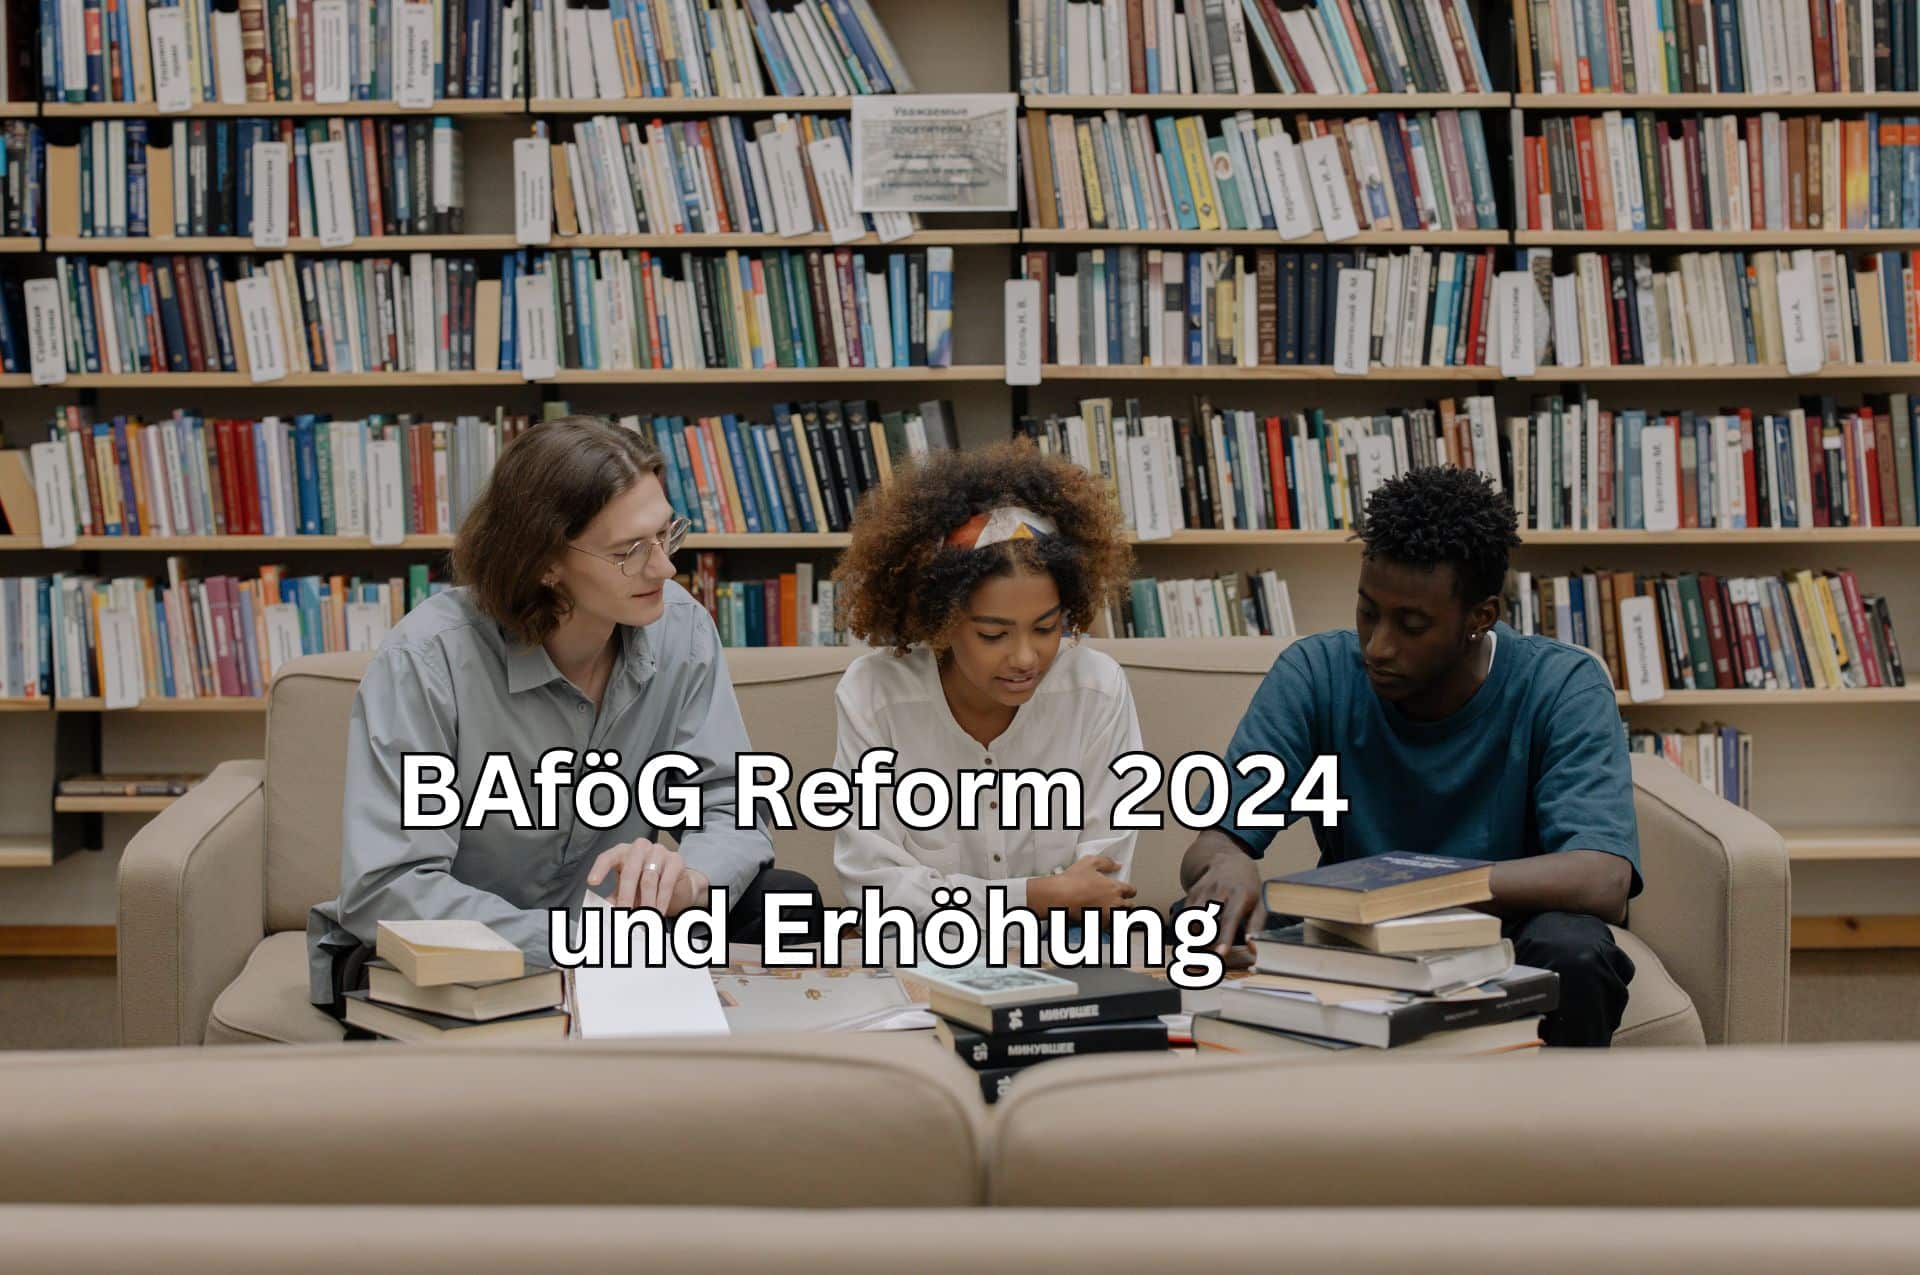 Um wie viel wird das BAföG 2024 erhöht? BAföG Reform kommt.